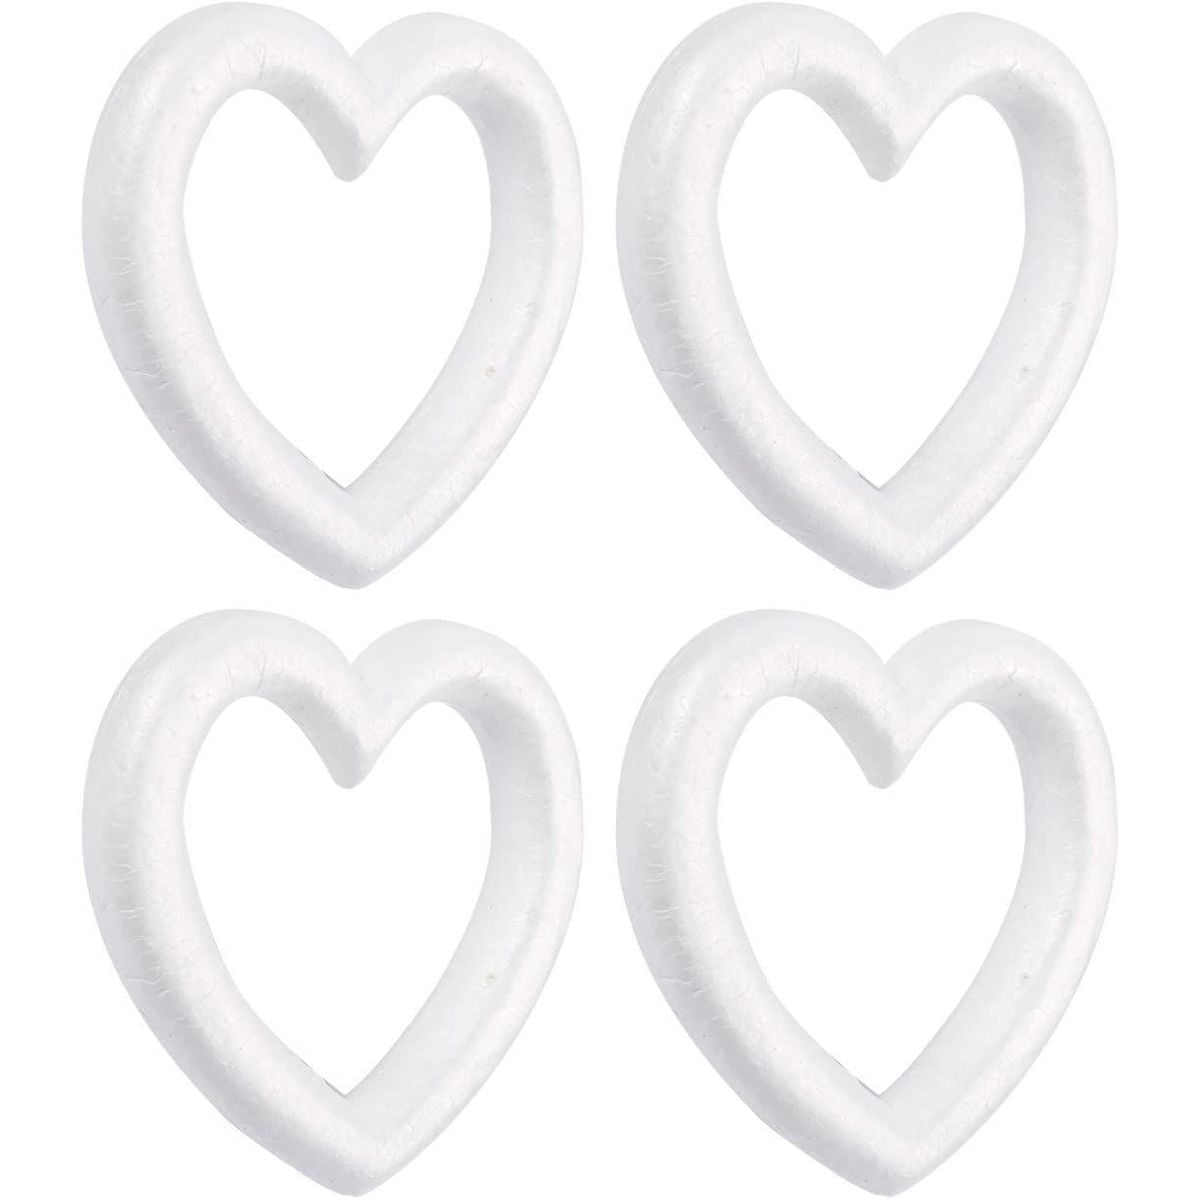 4 Pack White Foam Heart for Crafts, DIY Valentine's Decorations, Polystyrene Art Supplies, 10 x 10 x 2 inch